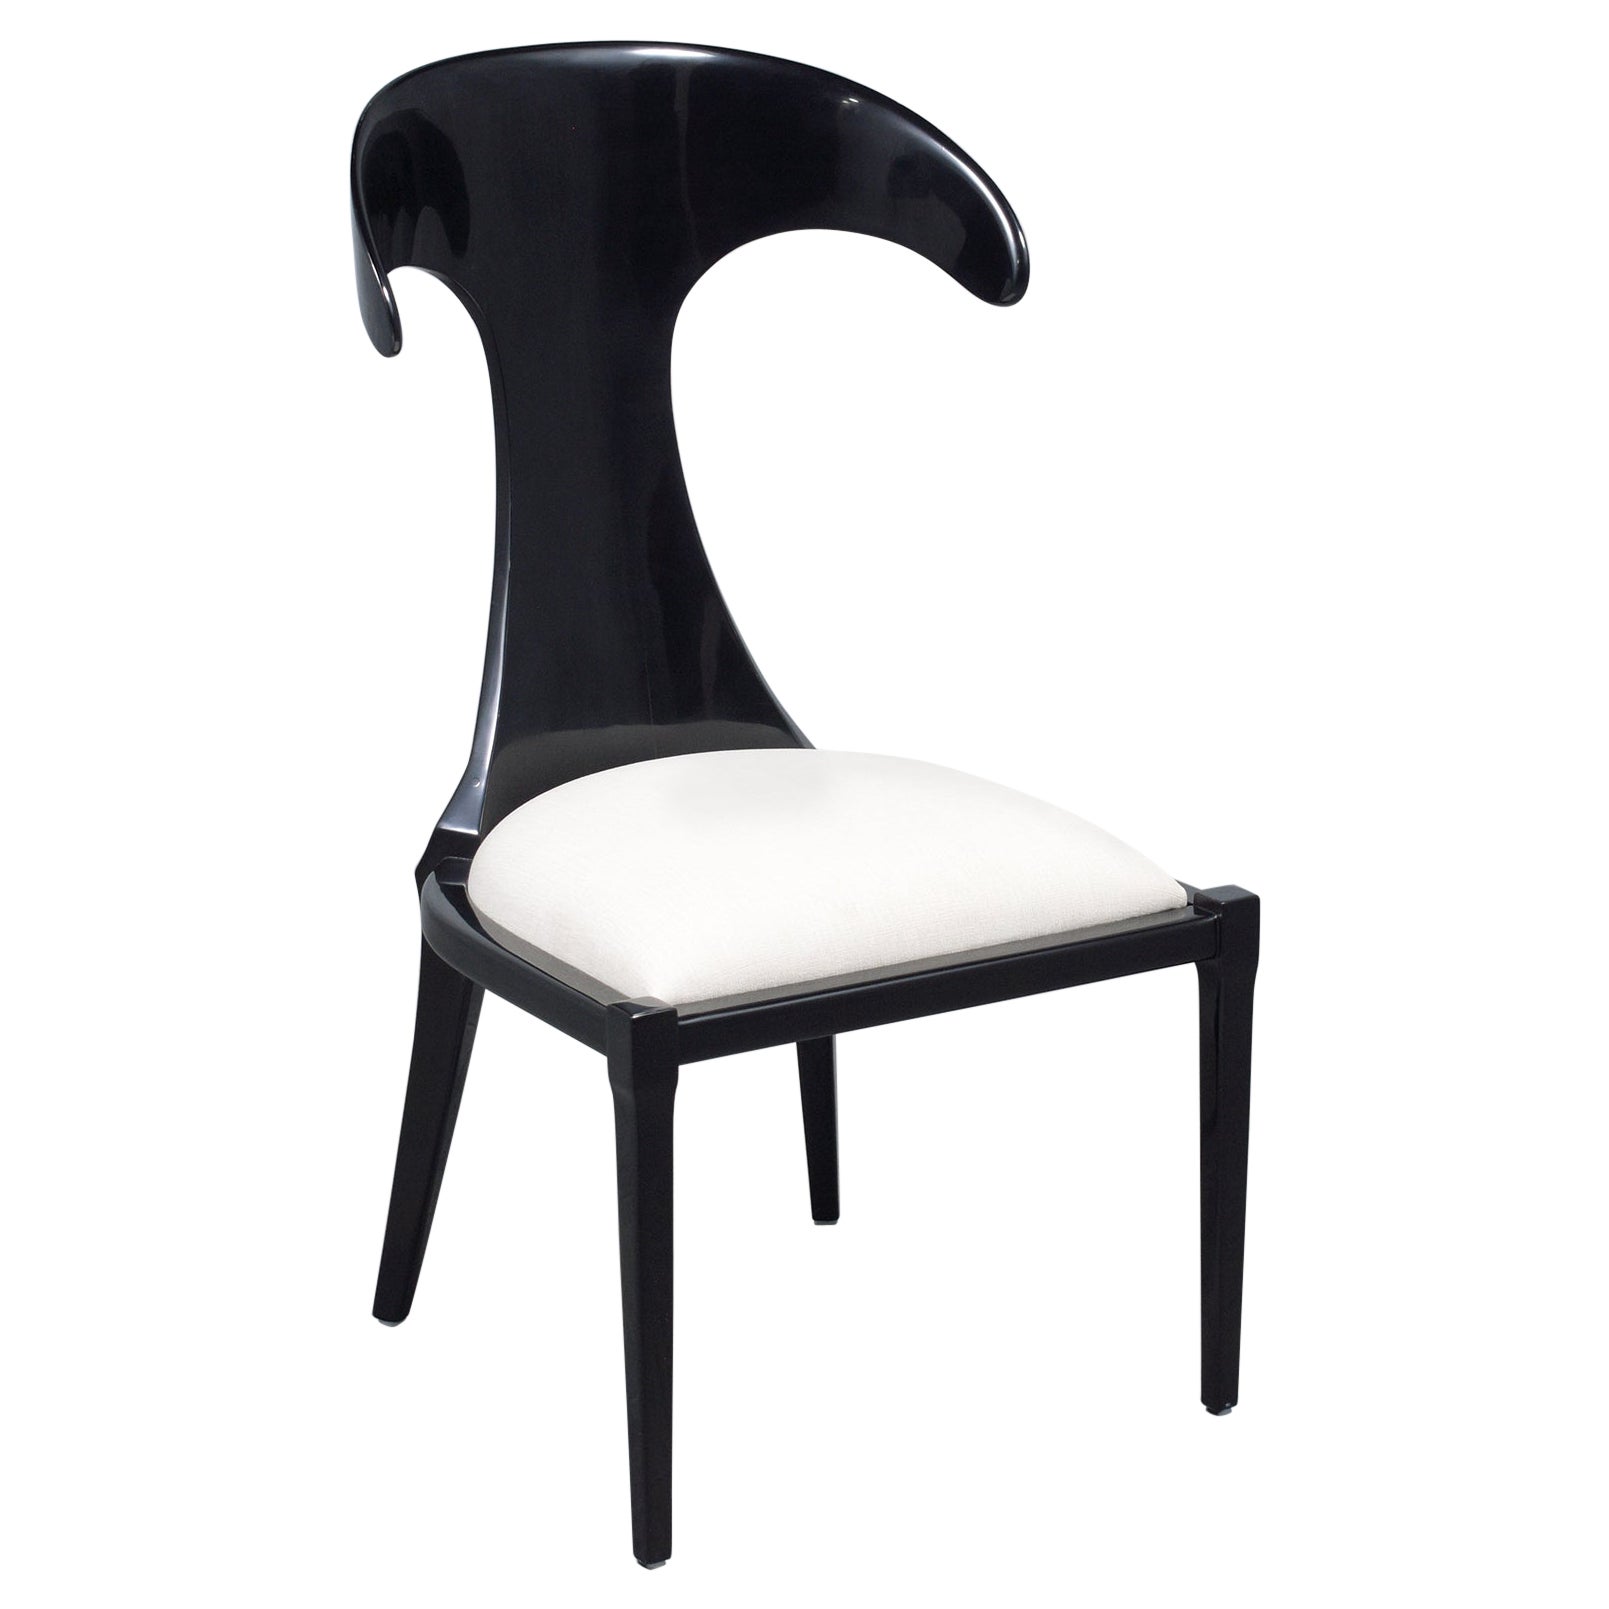 Ebonized Modernism Side Chair: Refinished Bent Wood with High Backrest Design For Sale